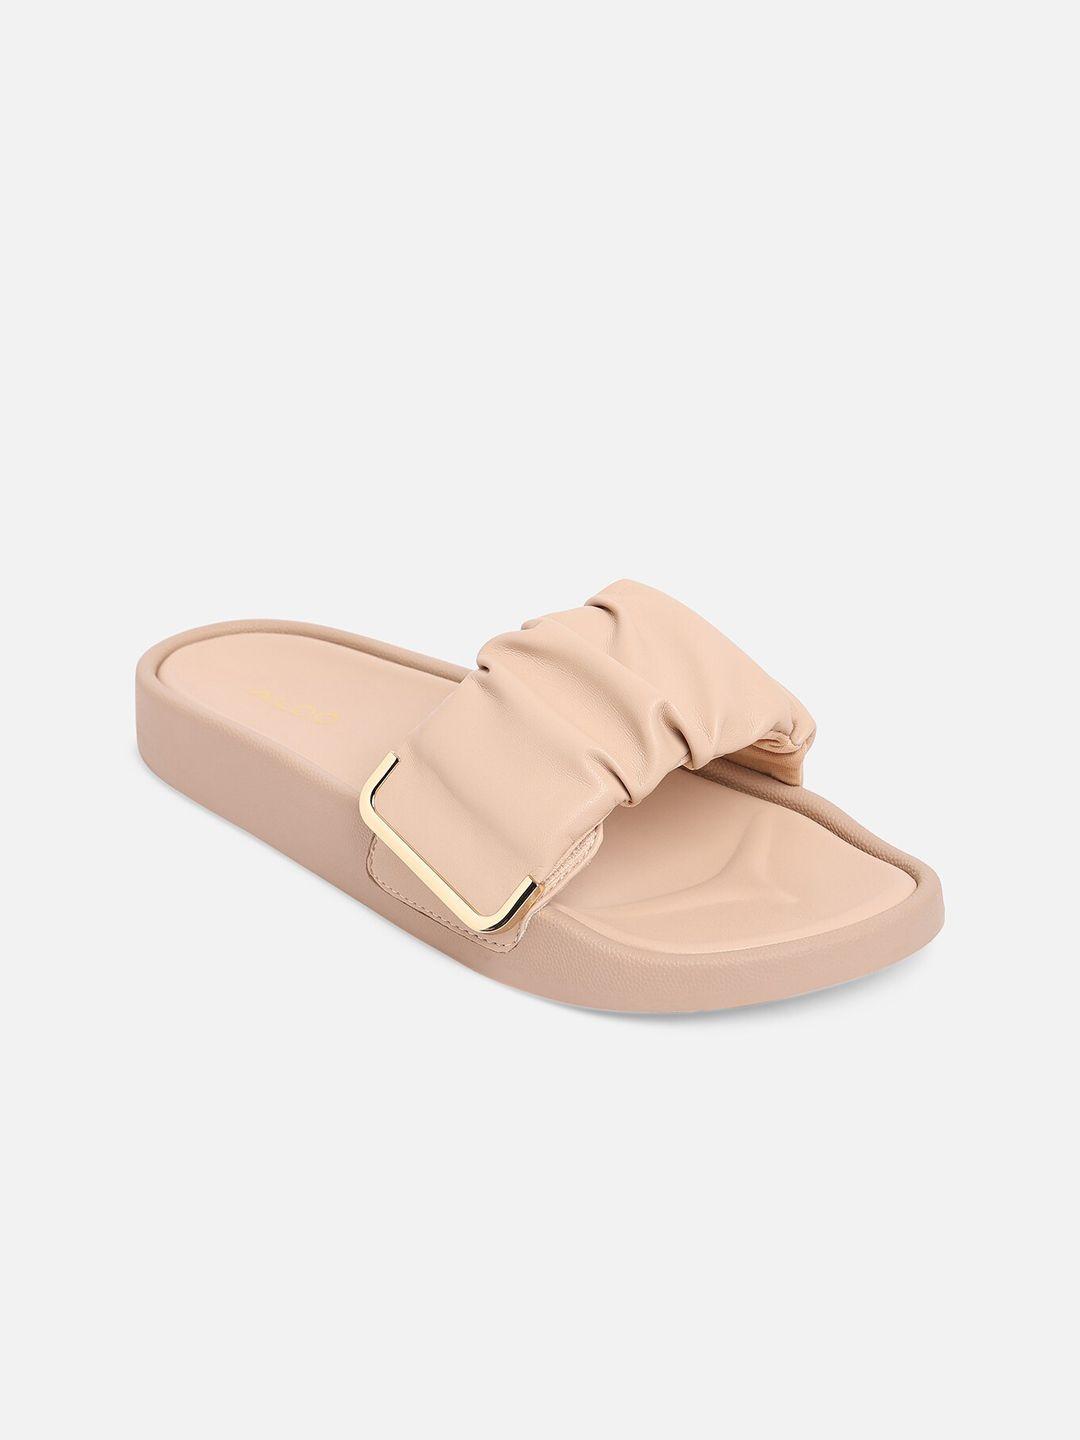 aldo-women-peach-coloured-open-toe-flats